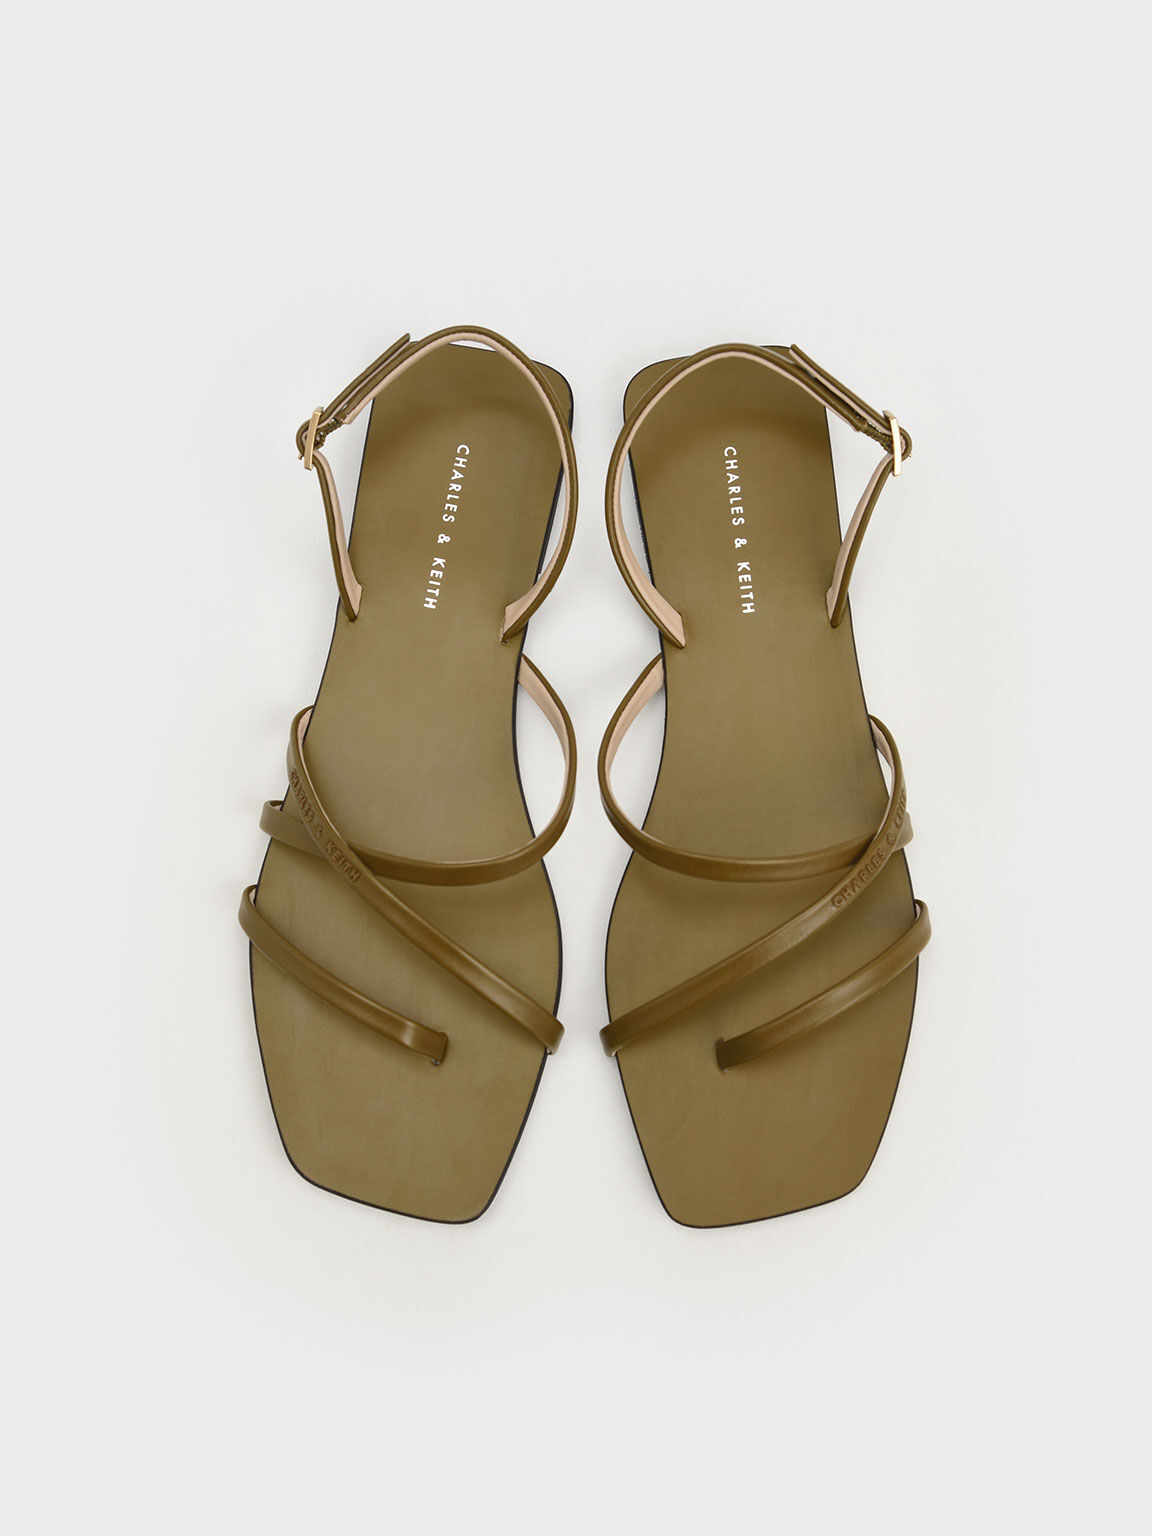 Strappy Square-Toe Slingback Sandals, Olive, hi-res